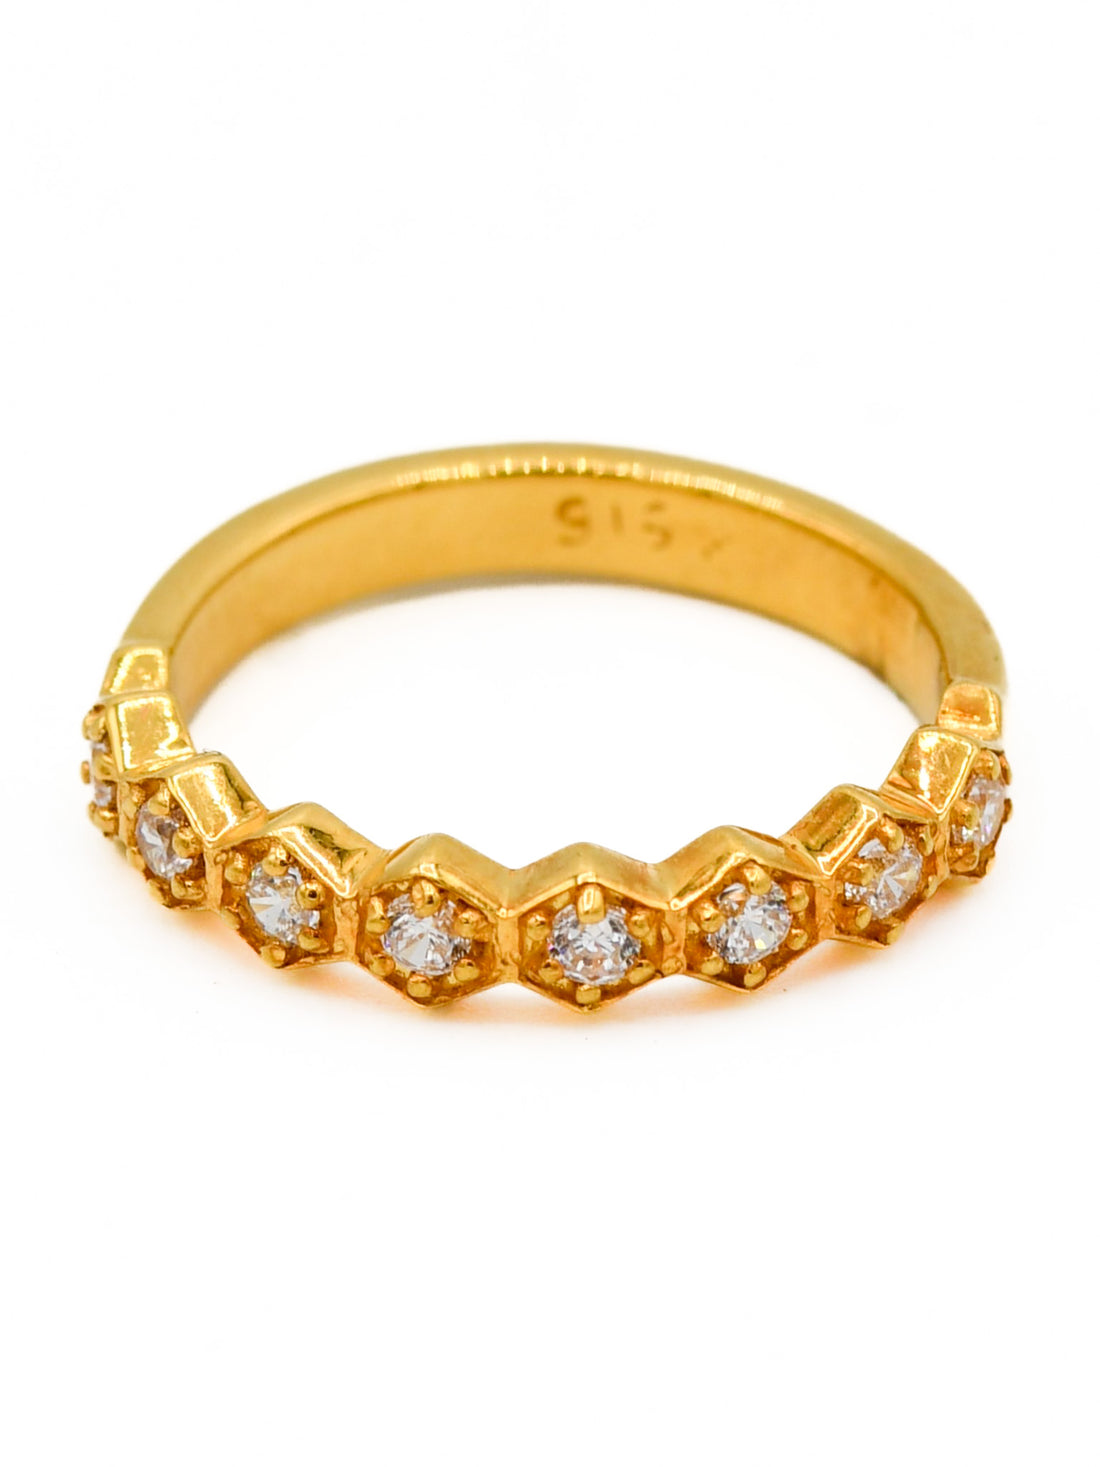 22ct Gold CZ Ladies Band Ring